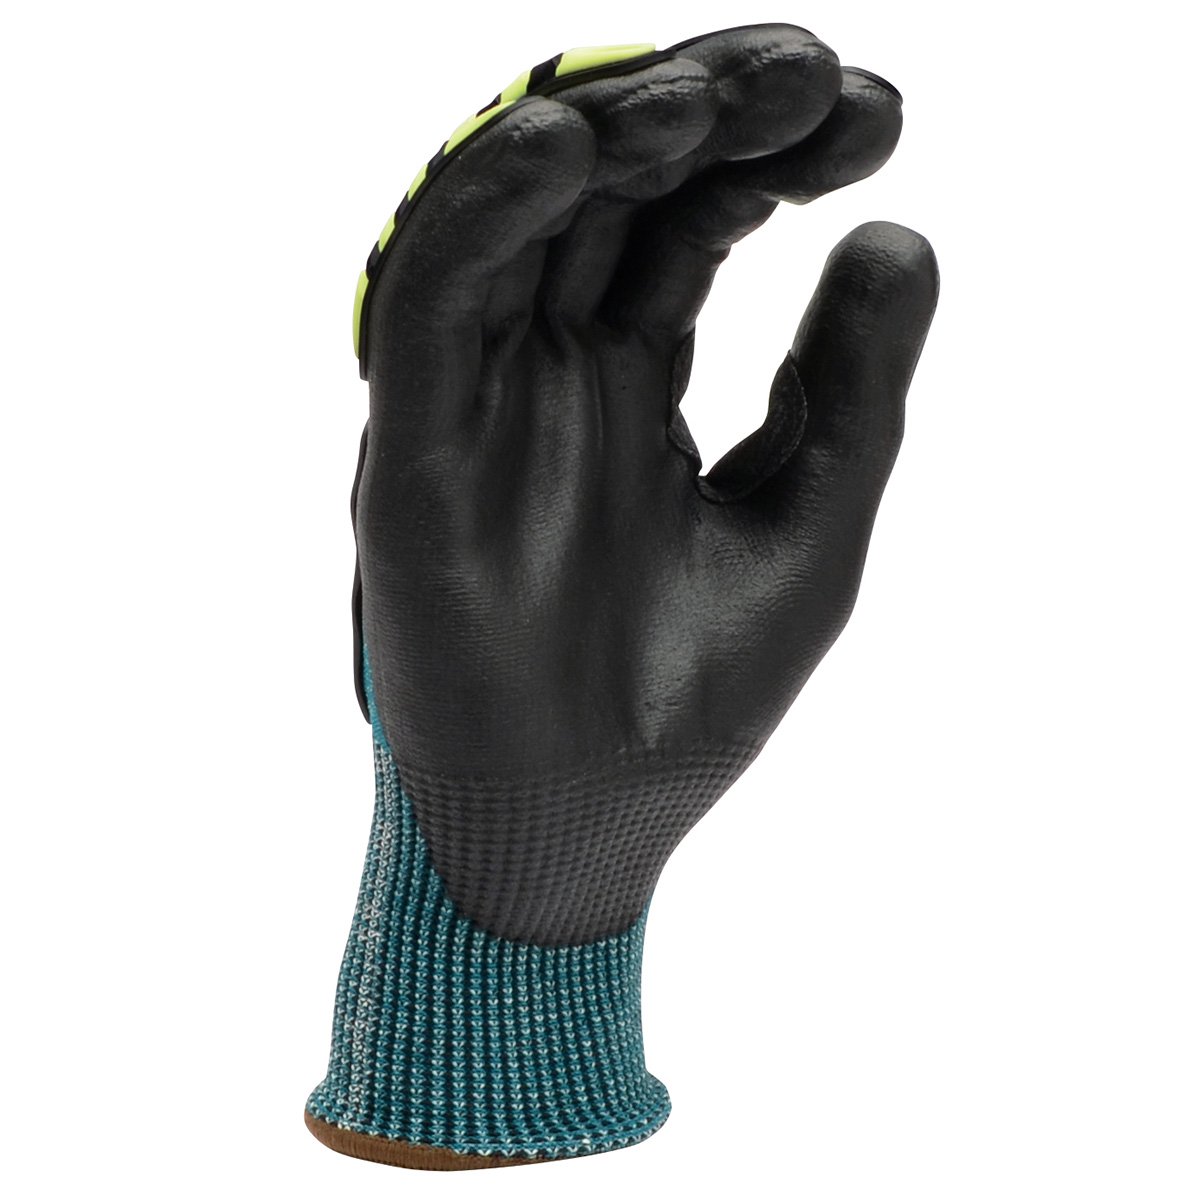 Coated Nylon XTRA Grip Gloves - Walker's